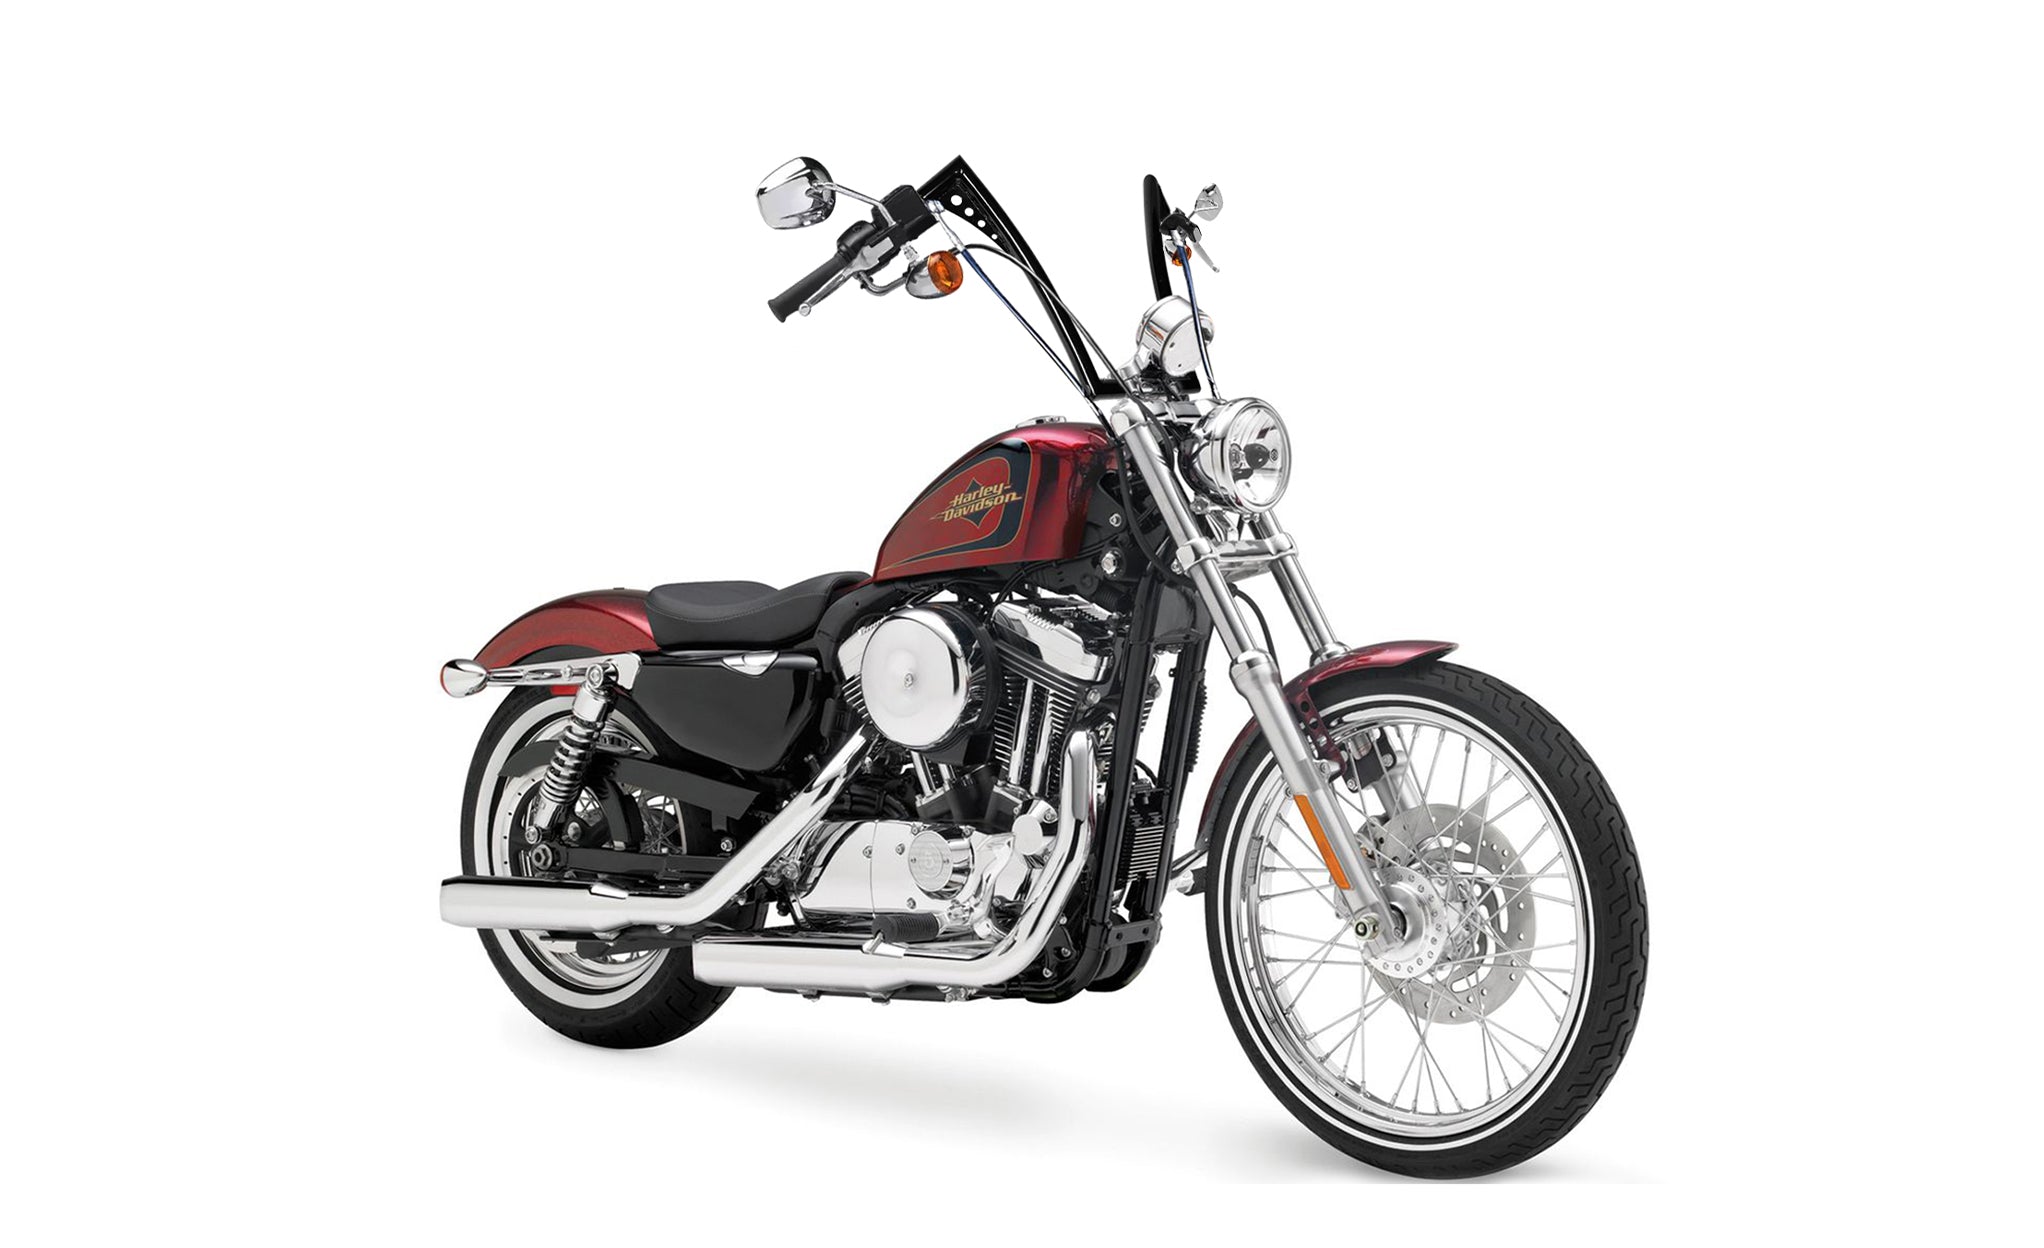 Viking Iron Born 12" Handlebar For Harley Sportster Seventy Two Gloss Black Bag on Bike View @expand